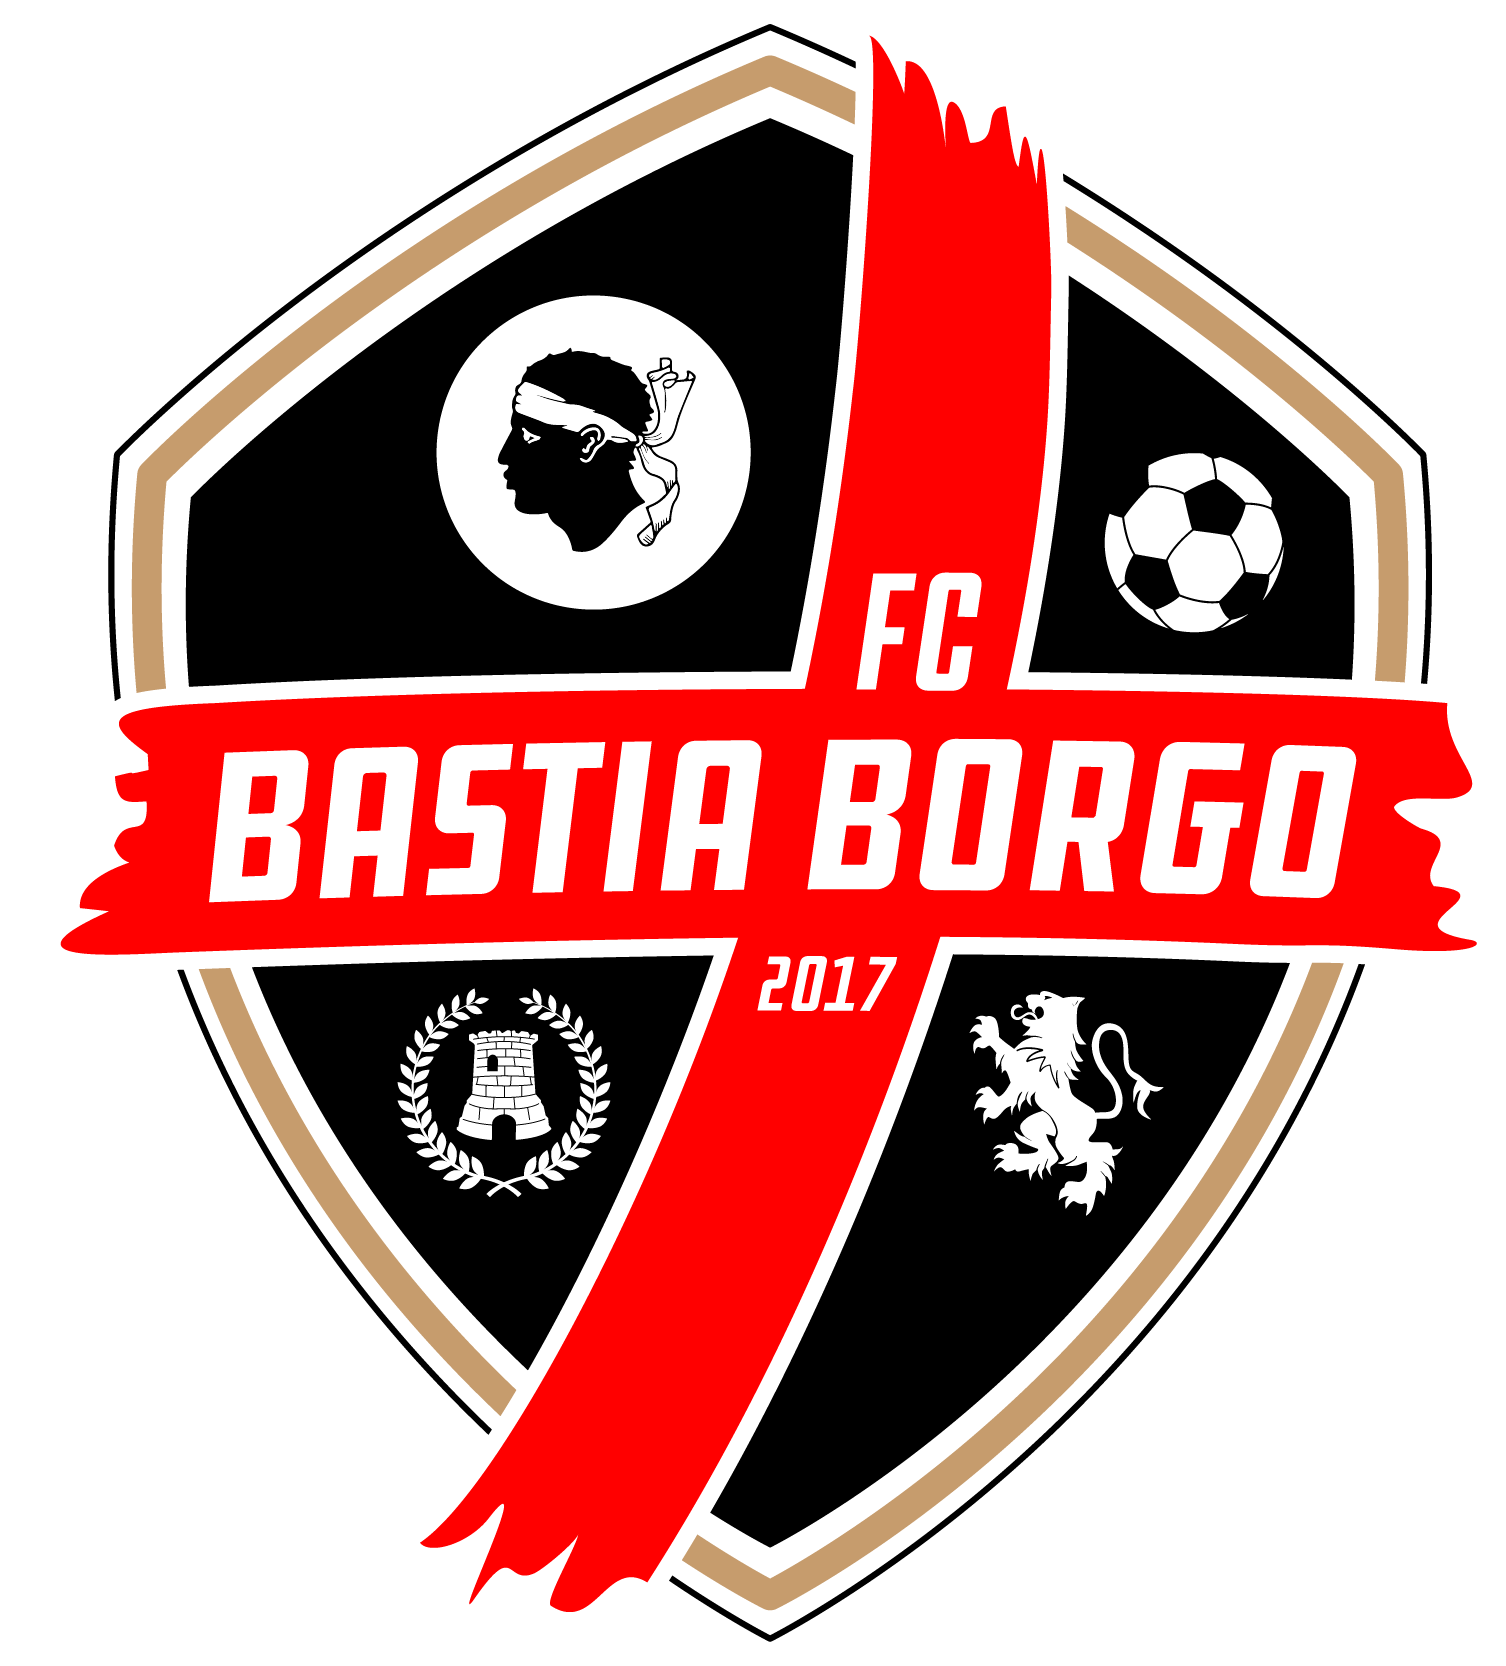 Football : Ça repart pour le FC Bastia Borgo... 